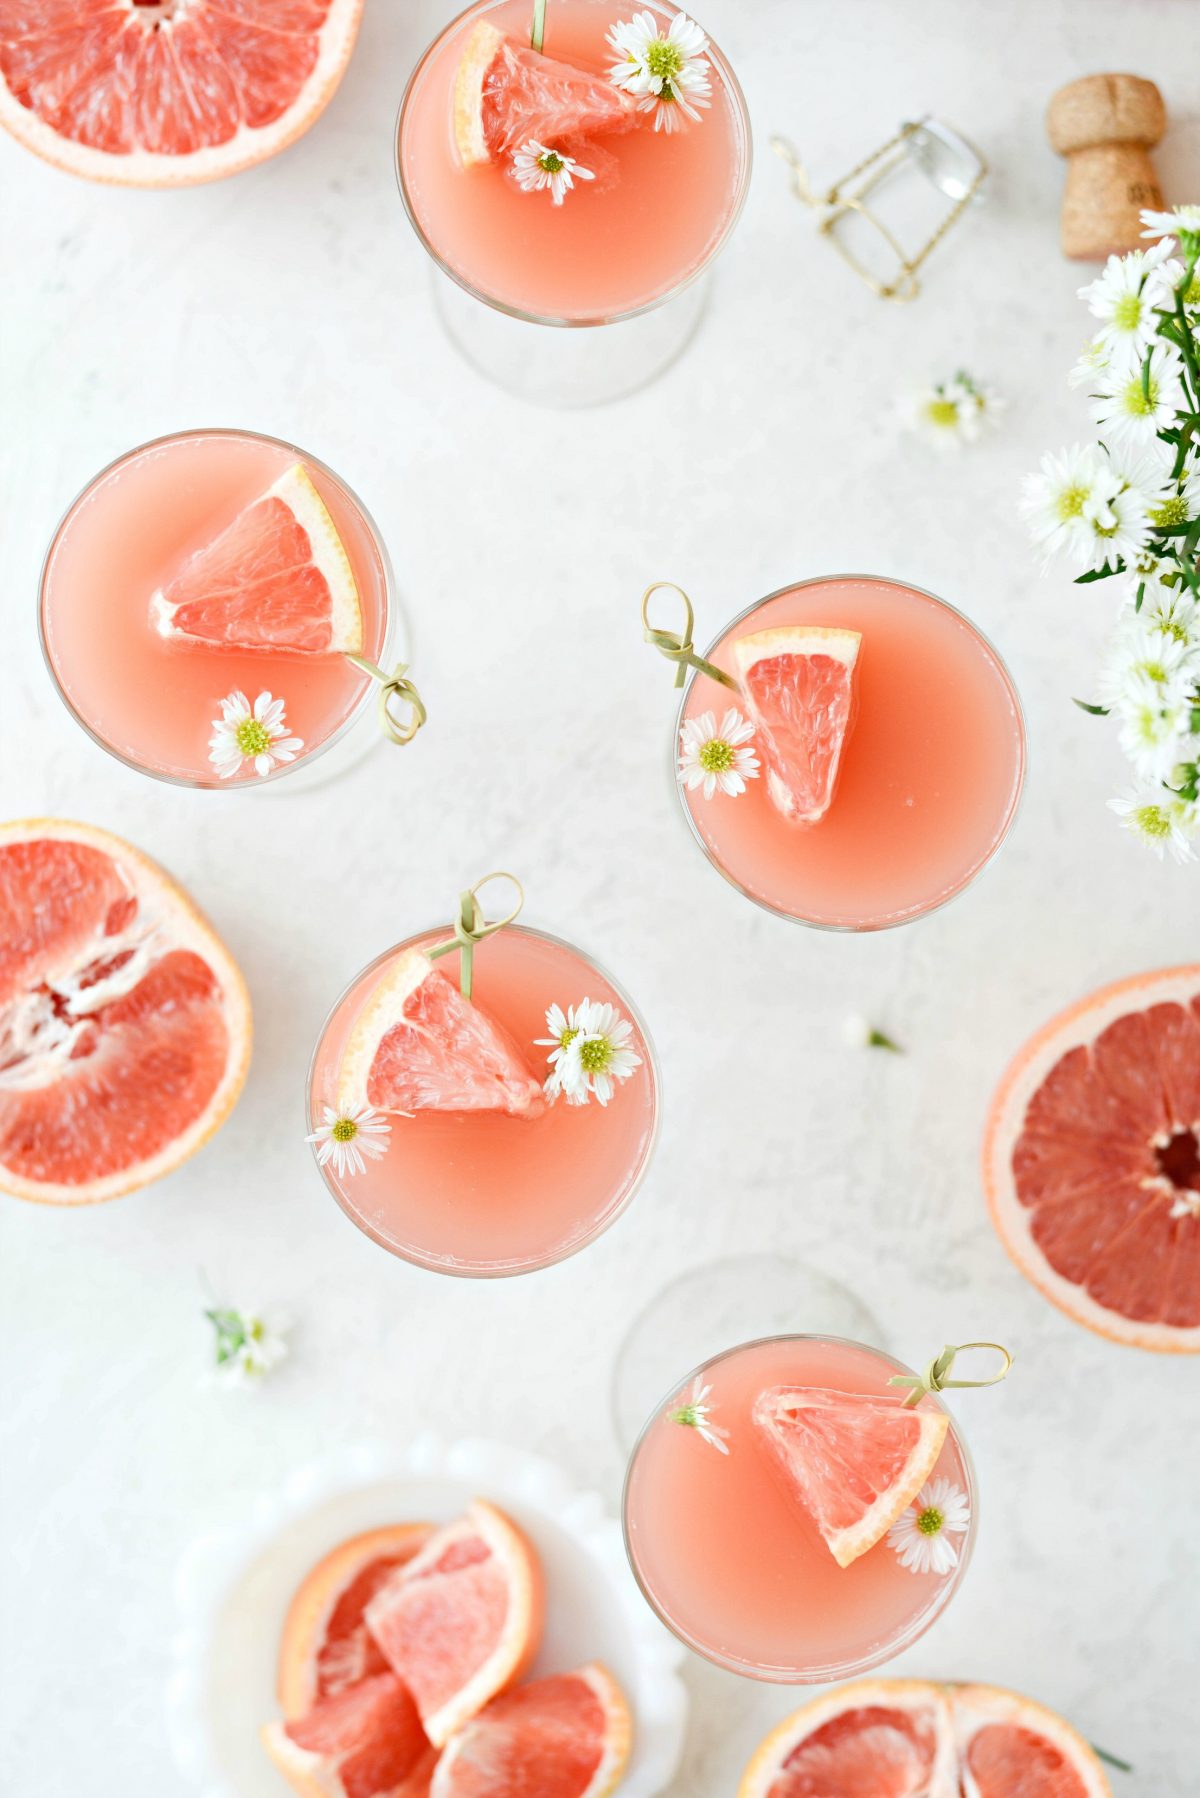  Grapefruit Rosé Mimosen l SimplyScratch.com #adult #beverage #grapefruit #rose #mimosa #easter #brunch #mothersday